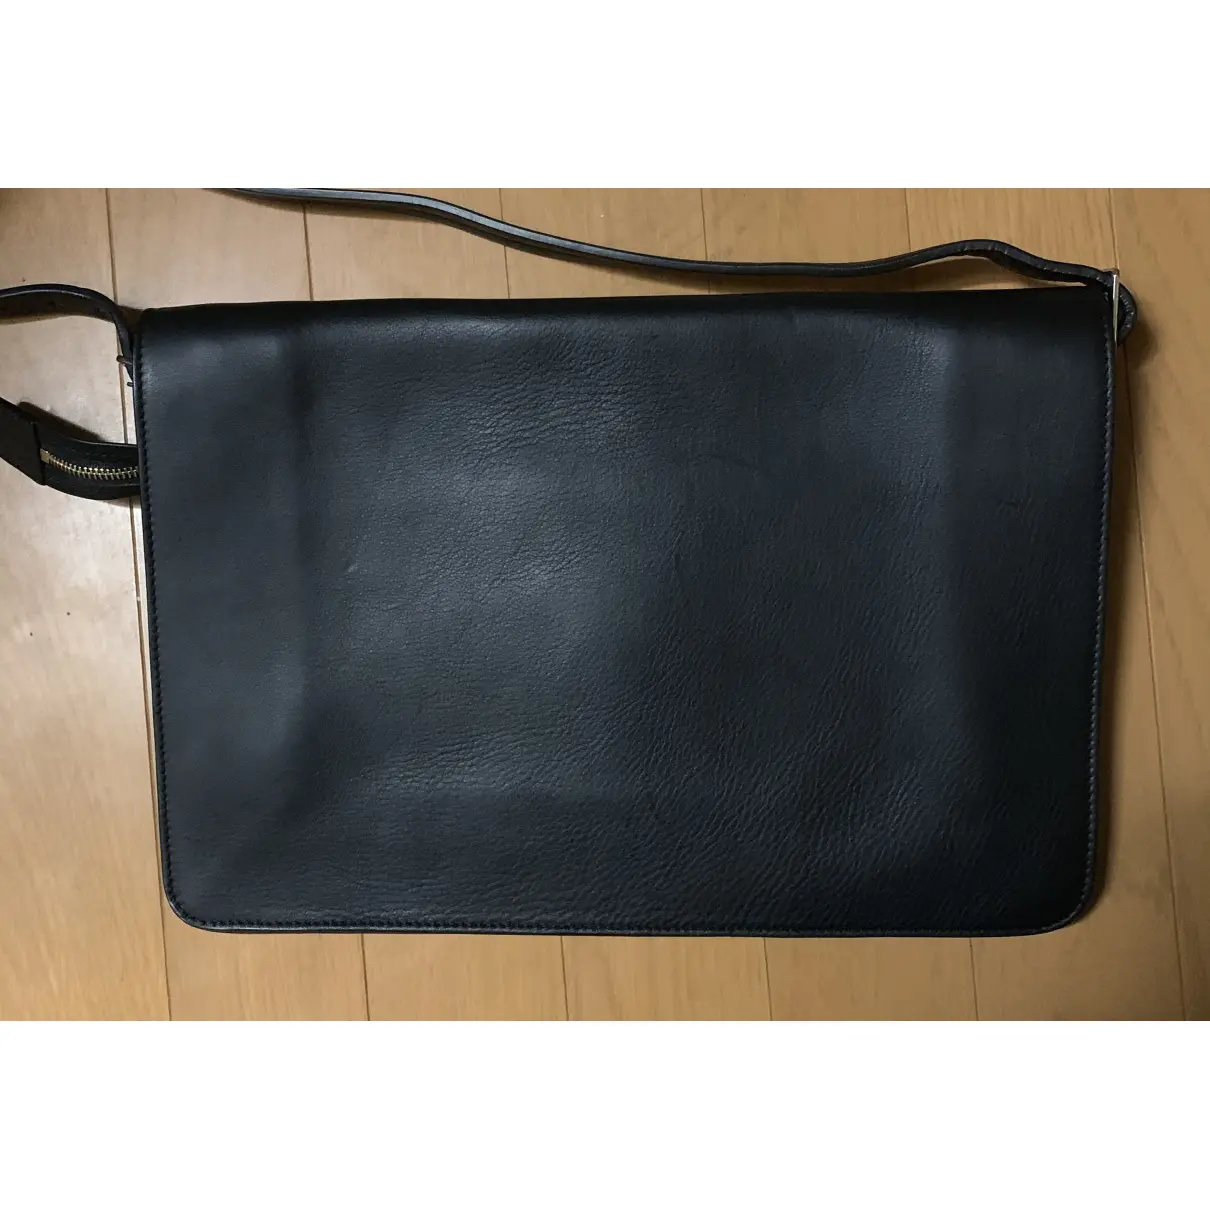 Buy Celine Clasp leather clutch bag online